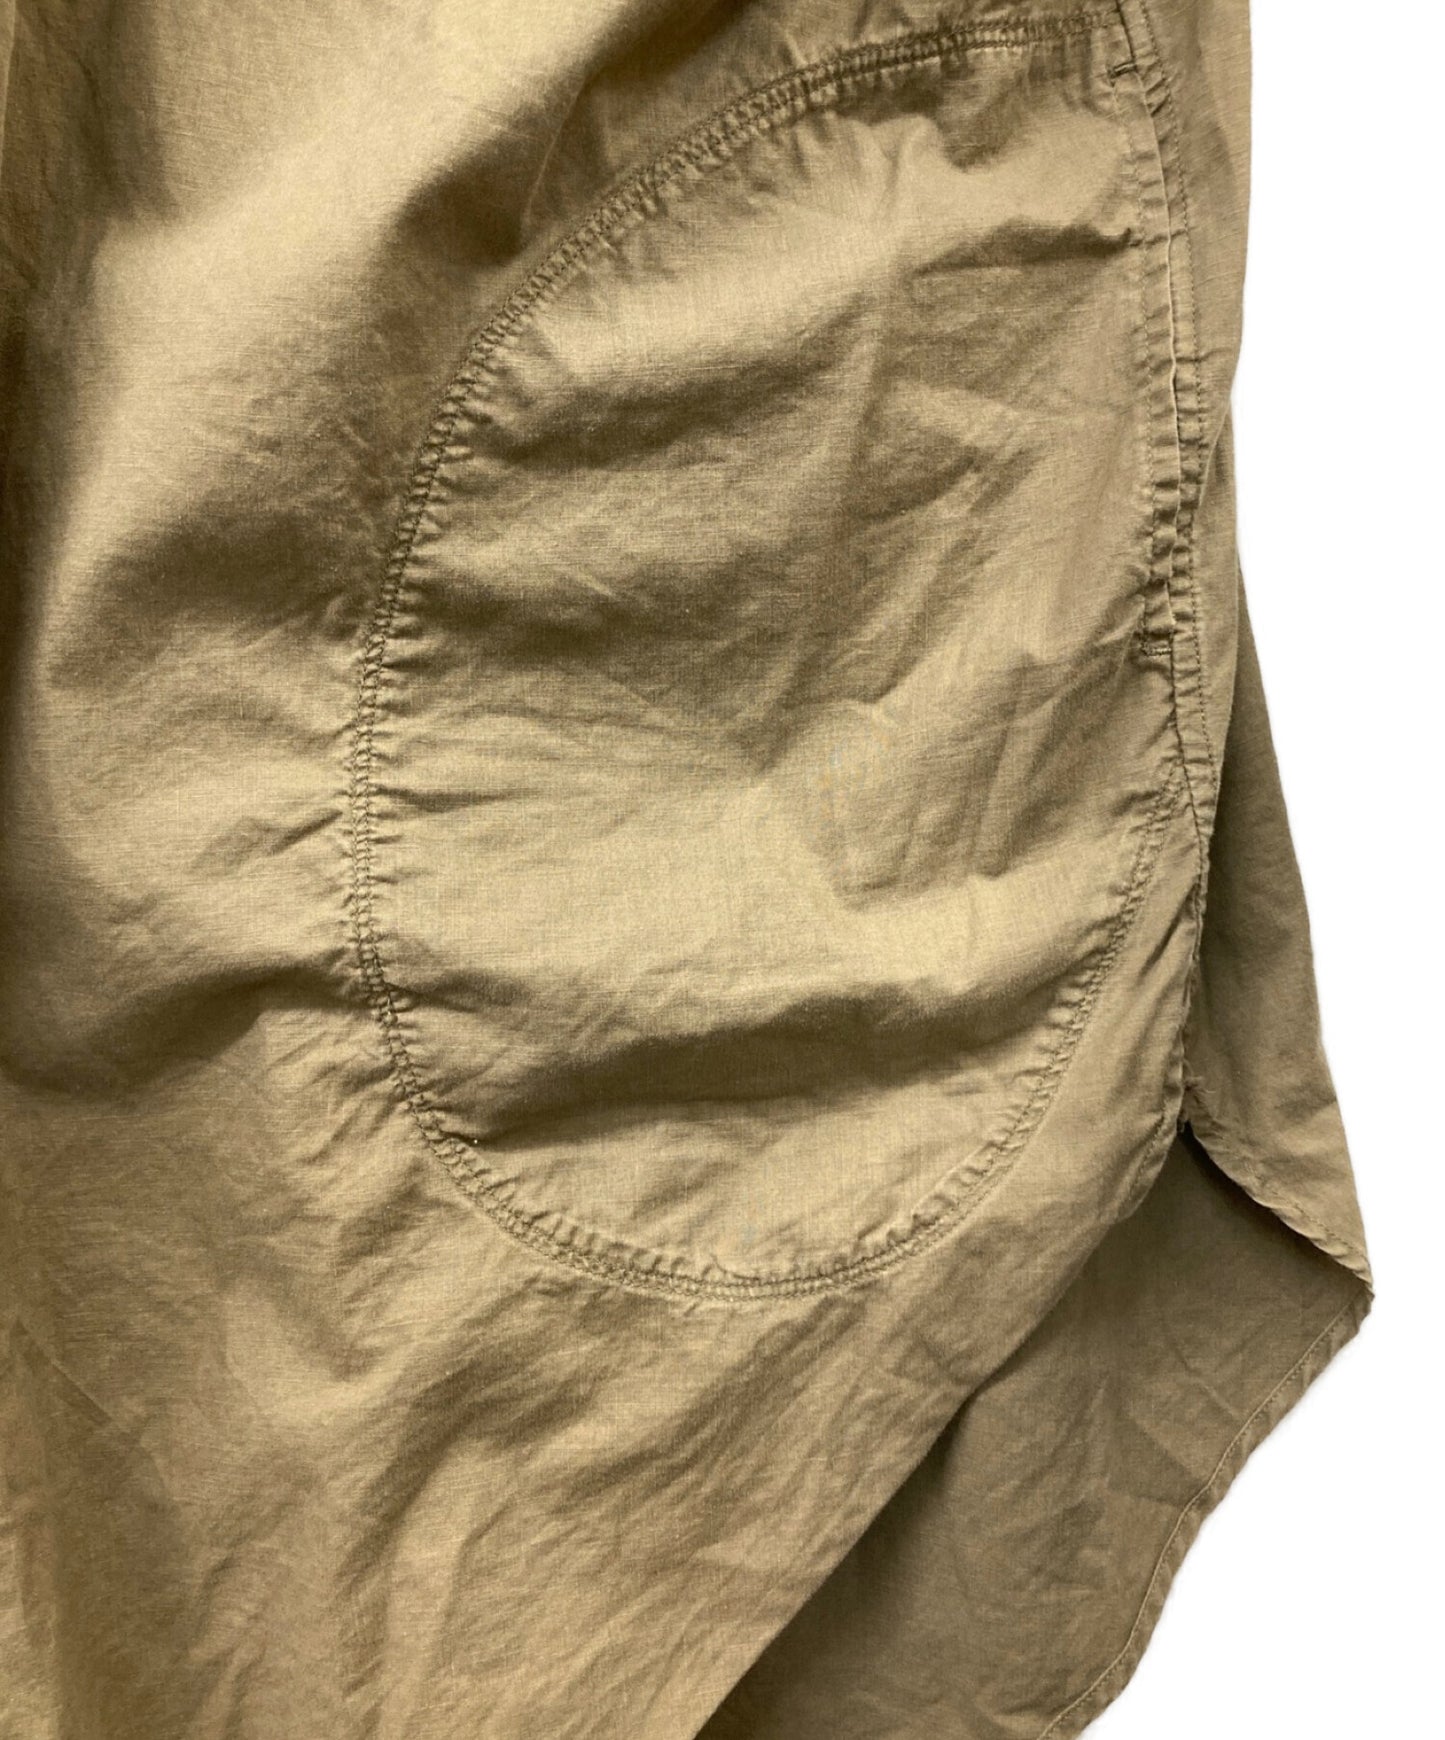 [Pre-owned] KAPITAL Cotton Slappy Shirt Coat/Long Shirt